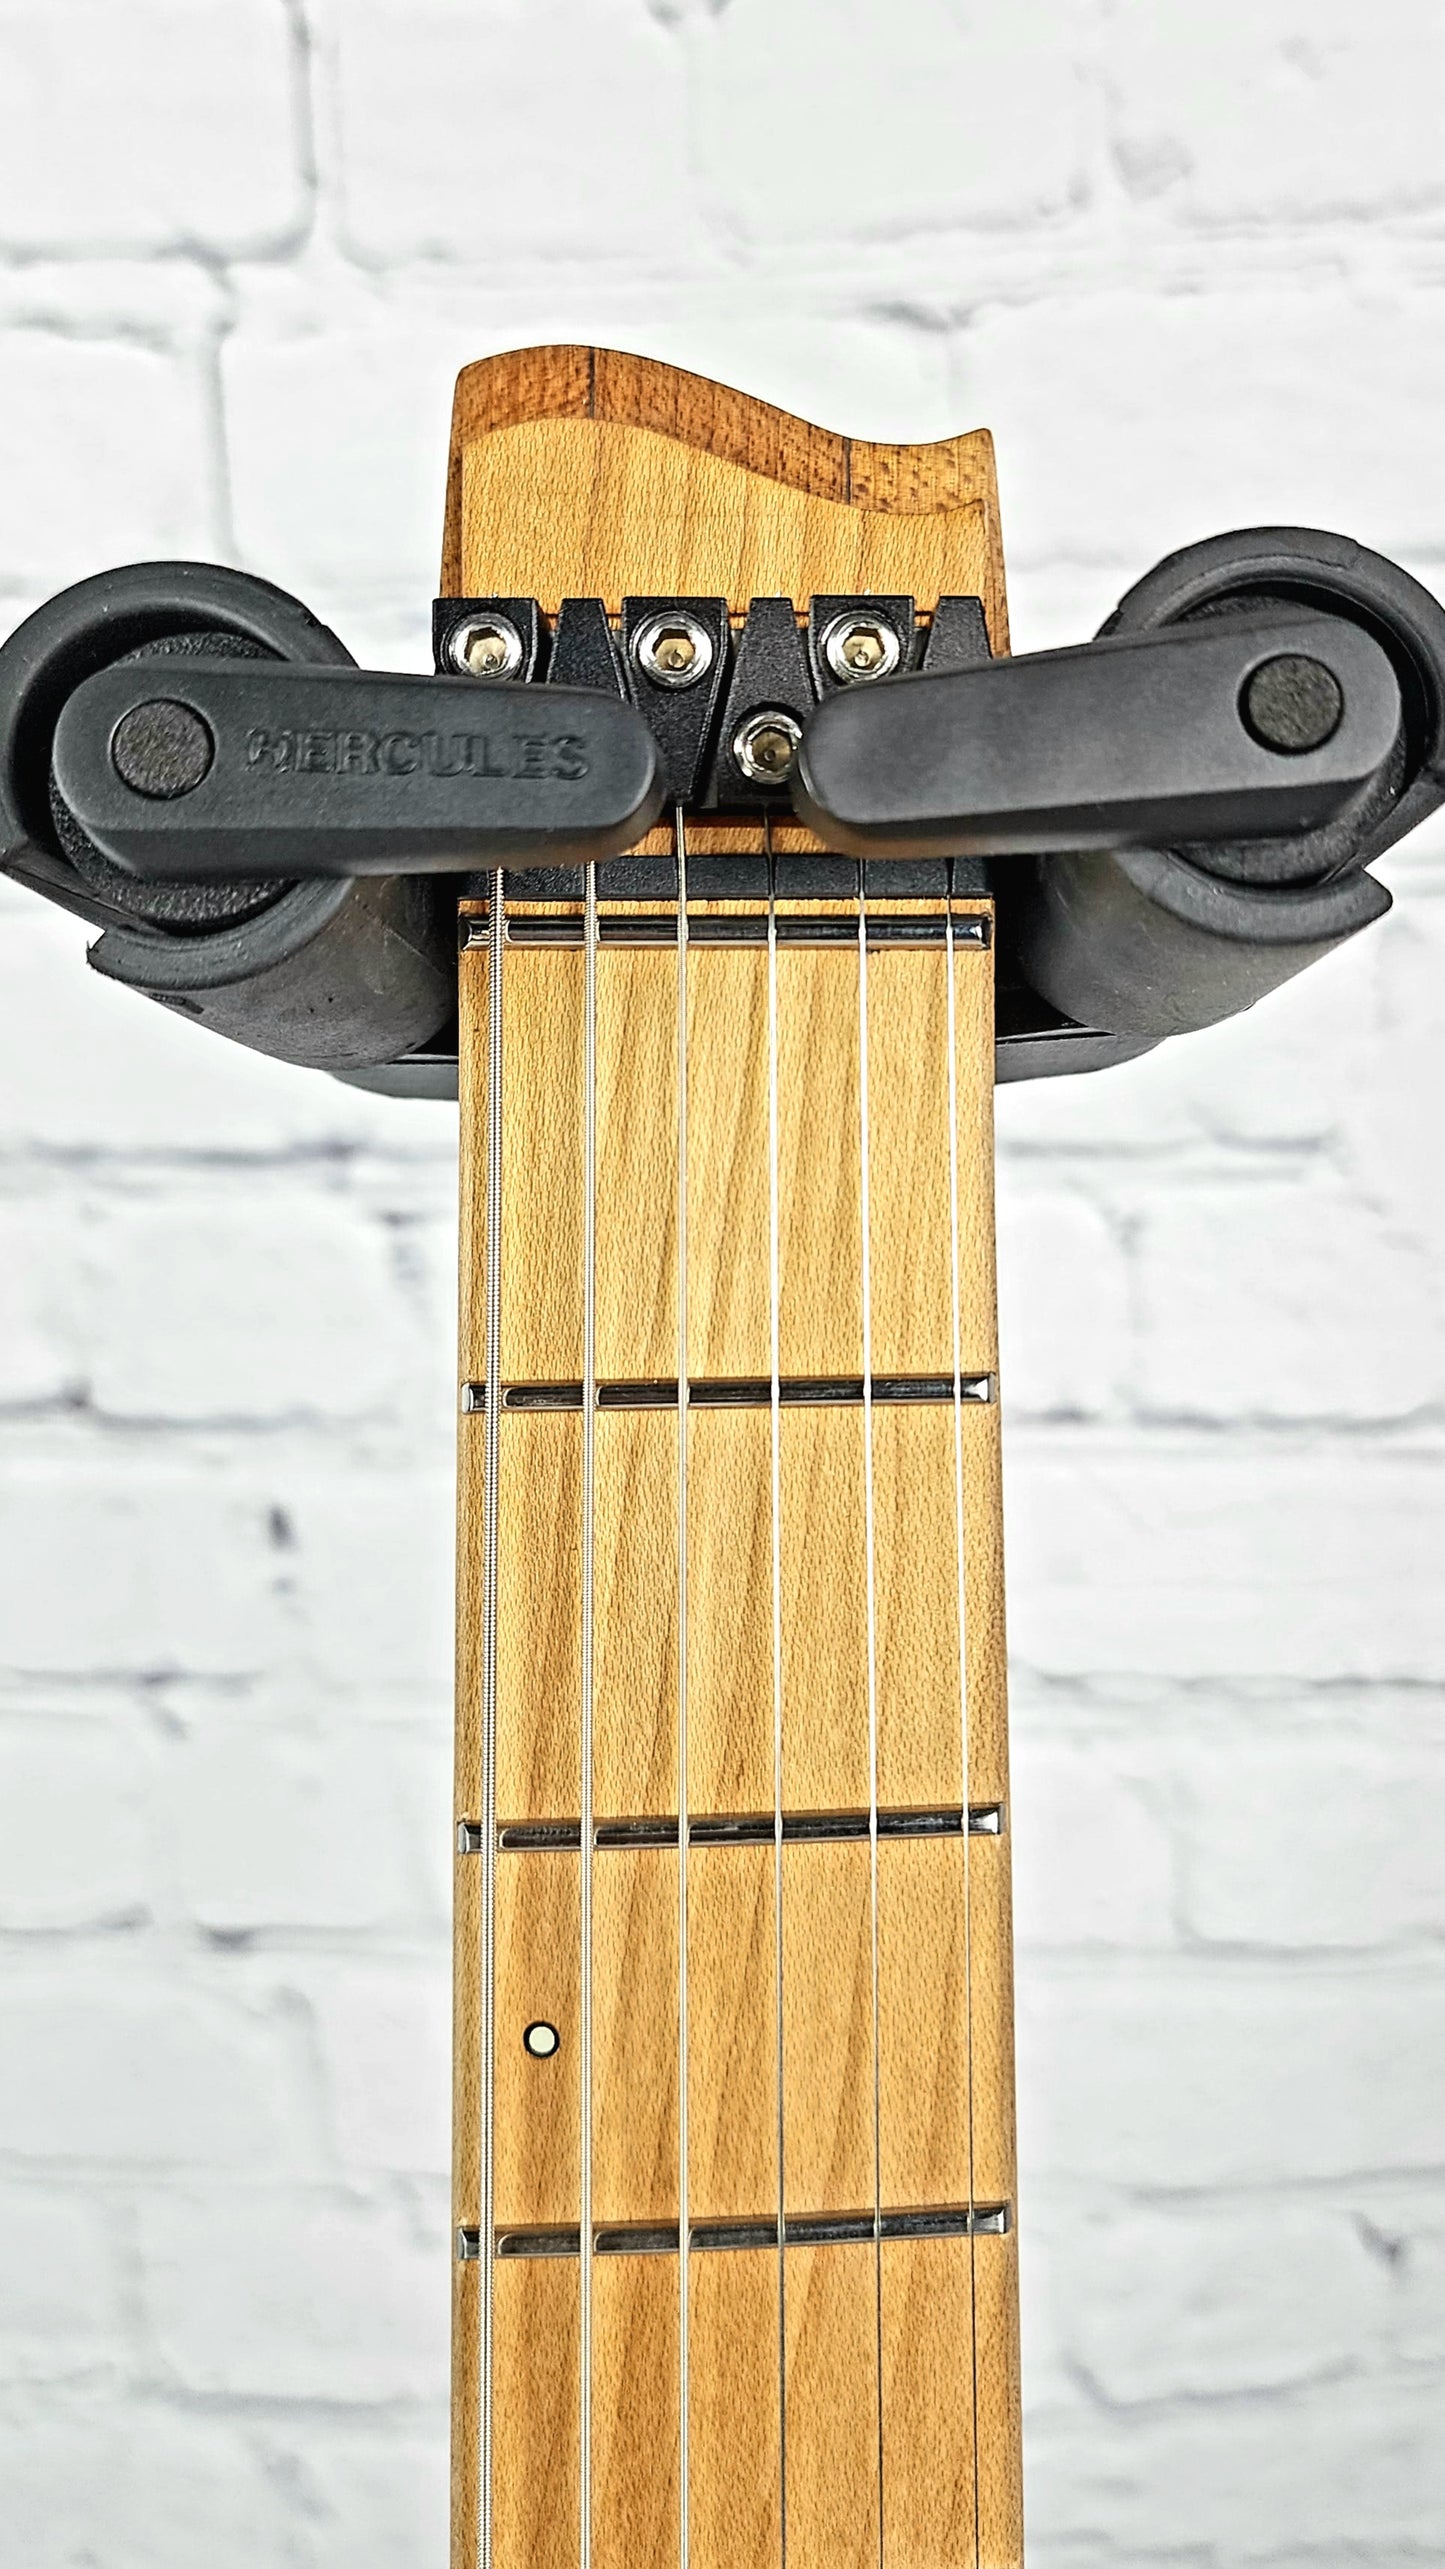 Strandberg Boden Standard 6 String Quilt Maple Bengal Electric Guitar